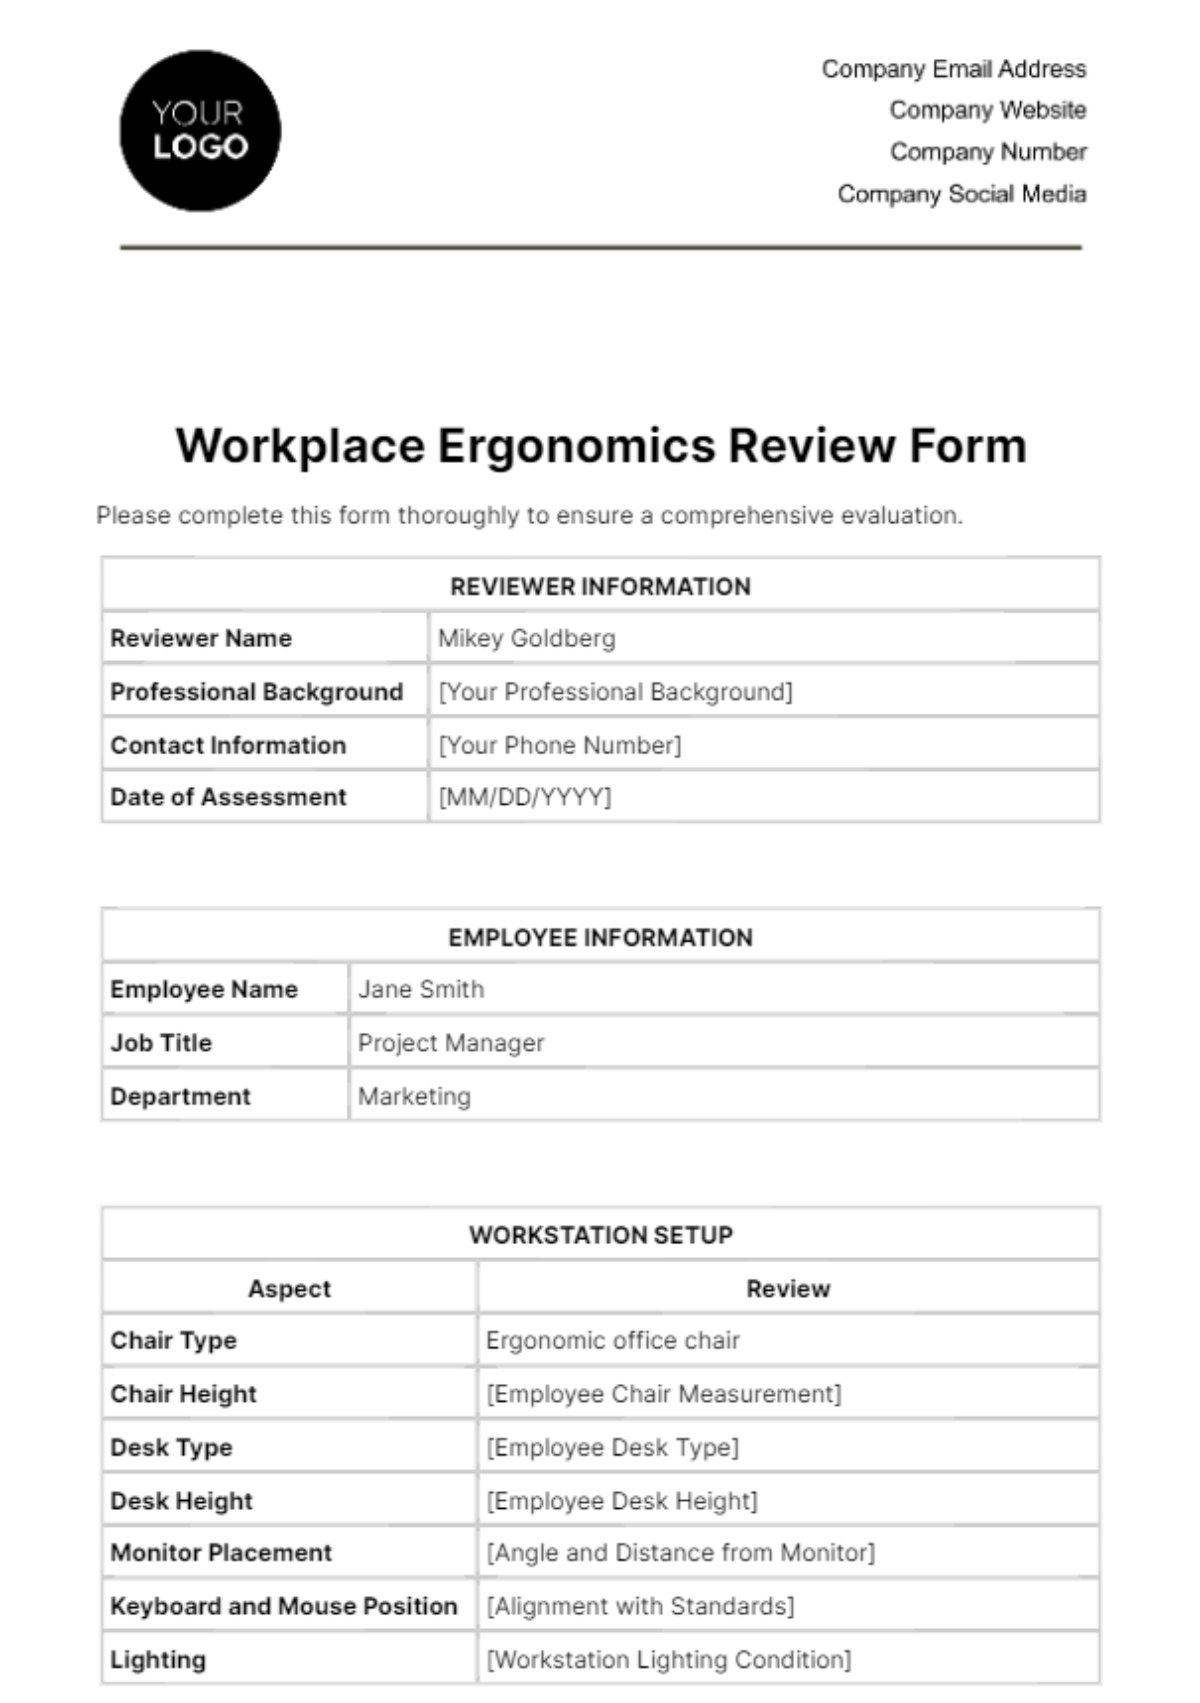 Workplace Ergonomics Review Form Template